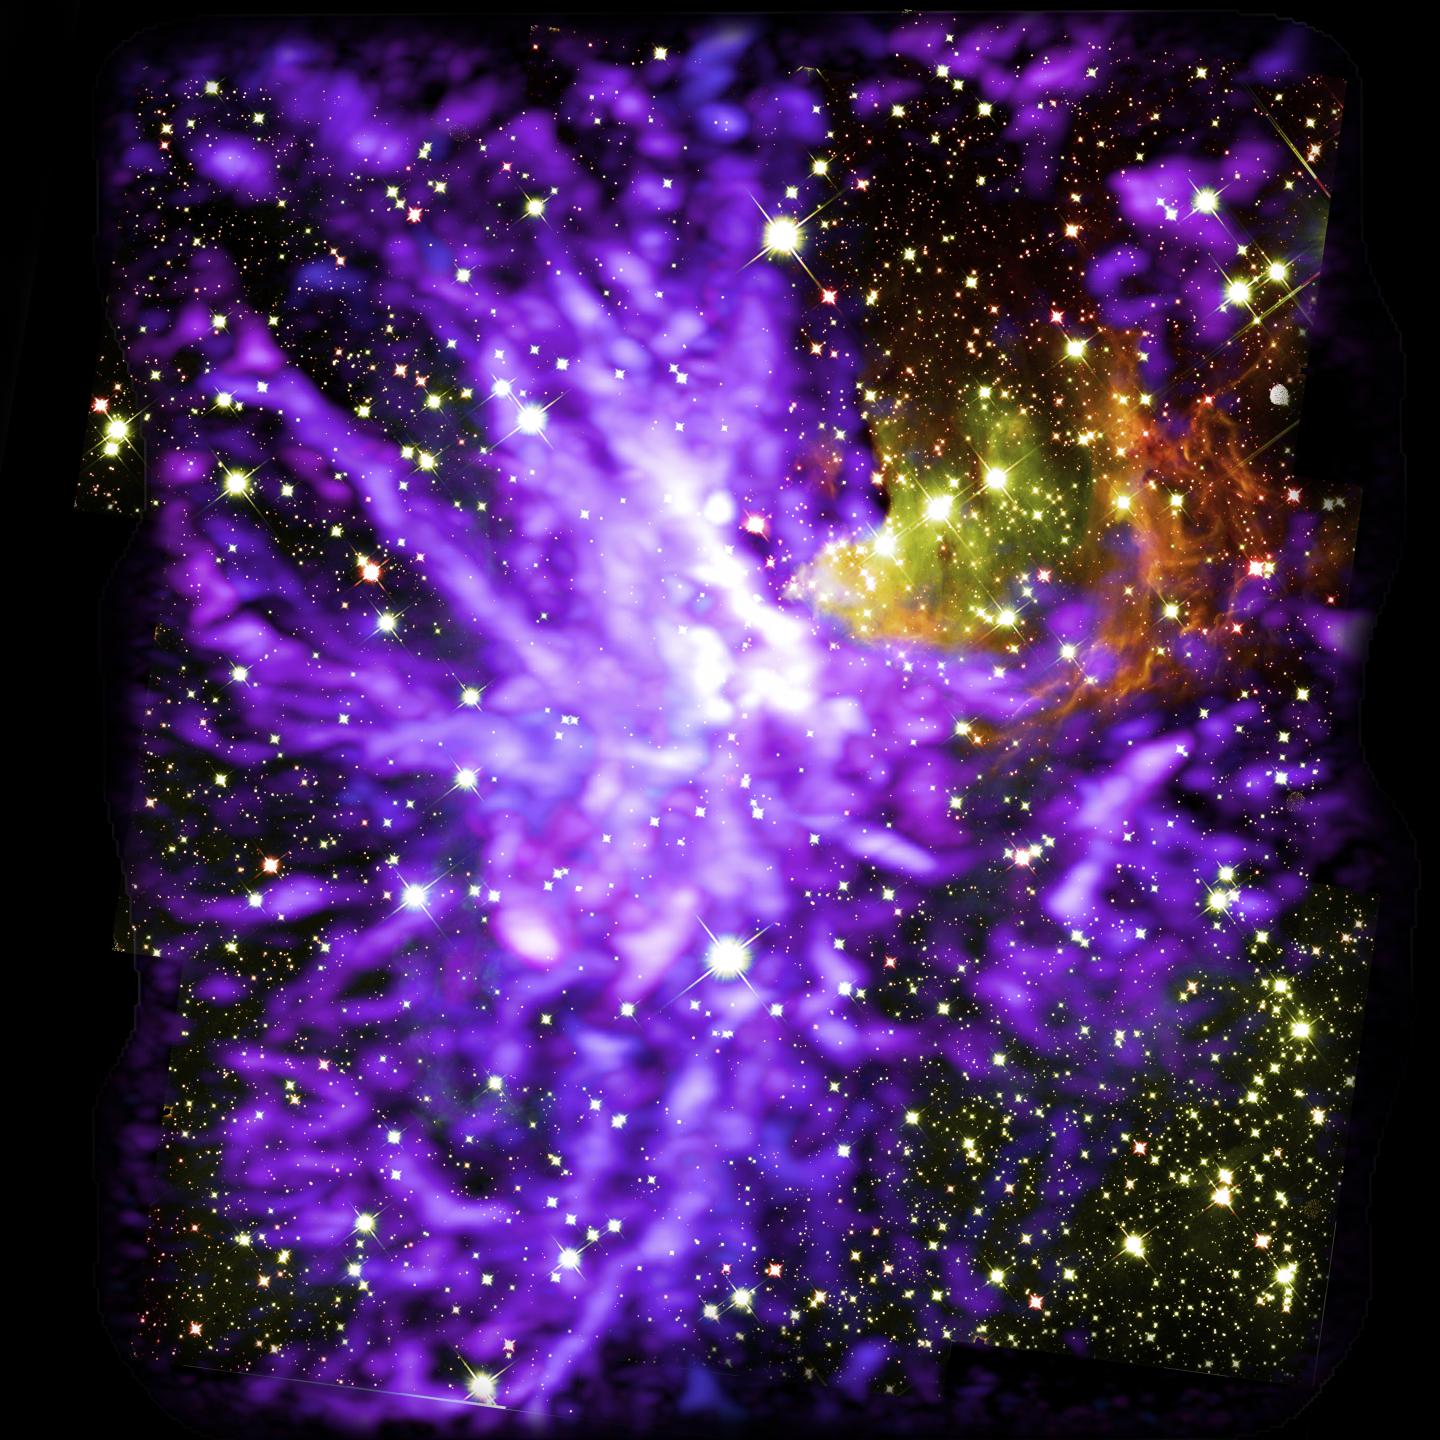 Star cluster G286.21+0.17